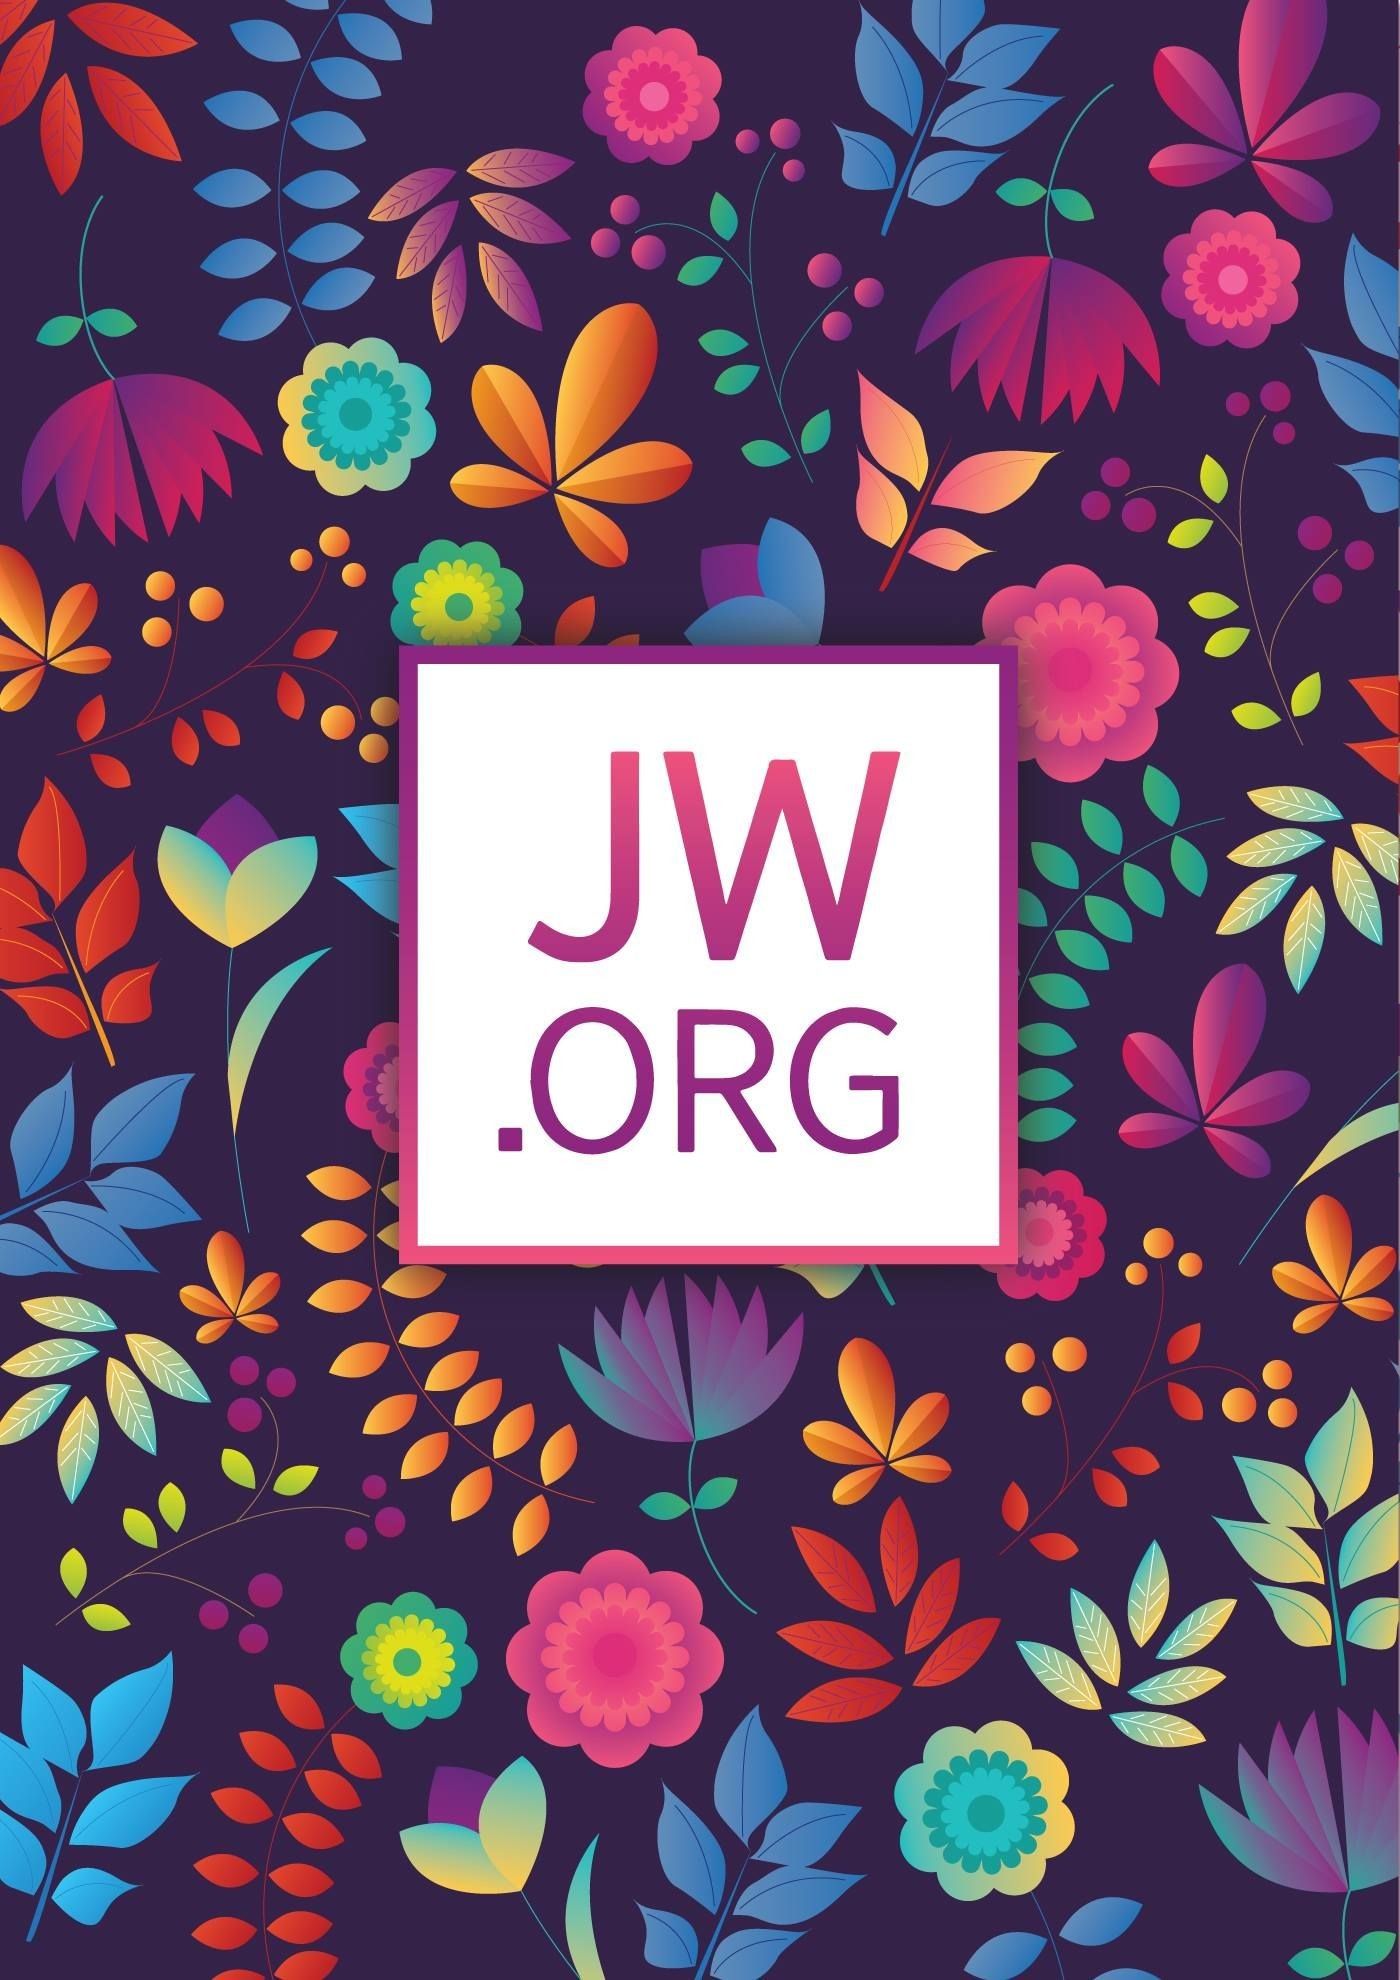 Jw Org Wallpaper Desktop Image